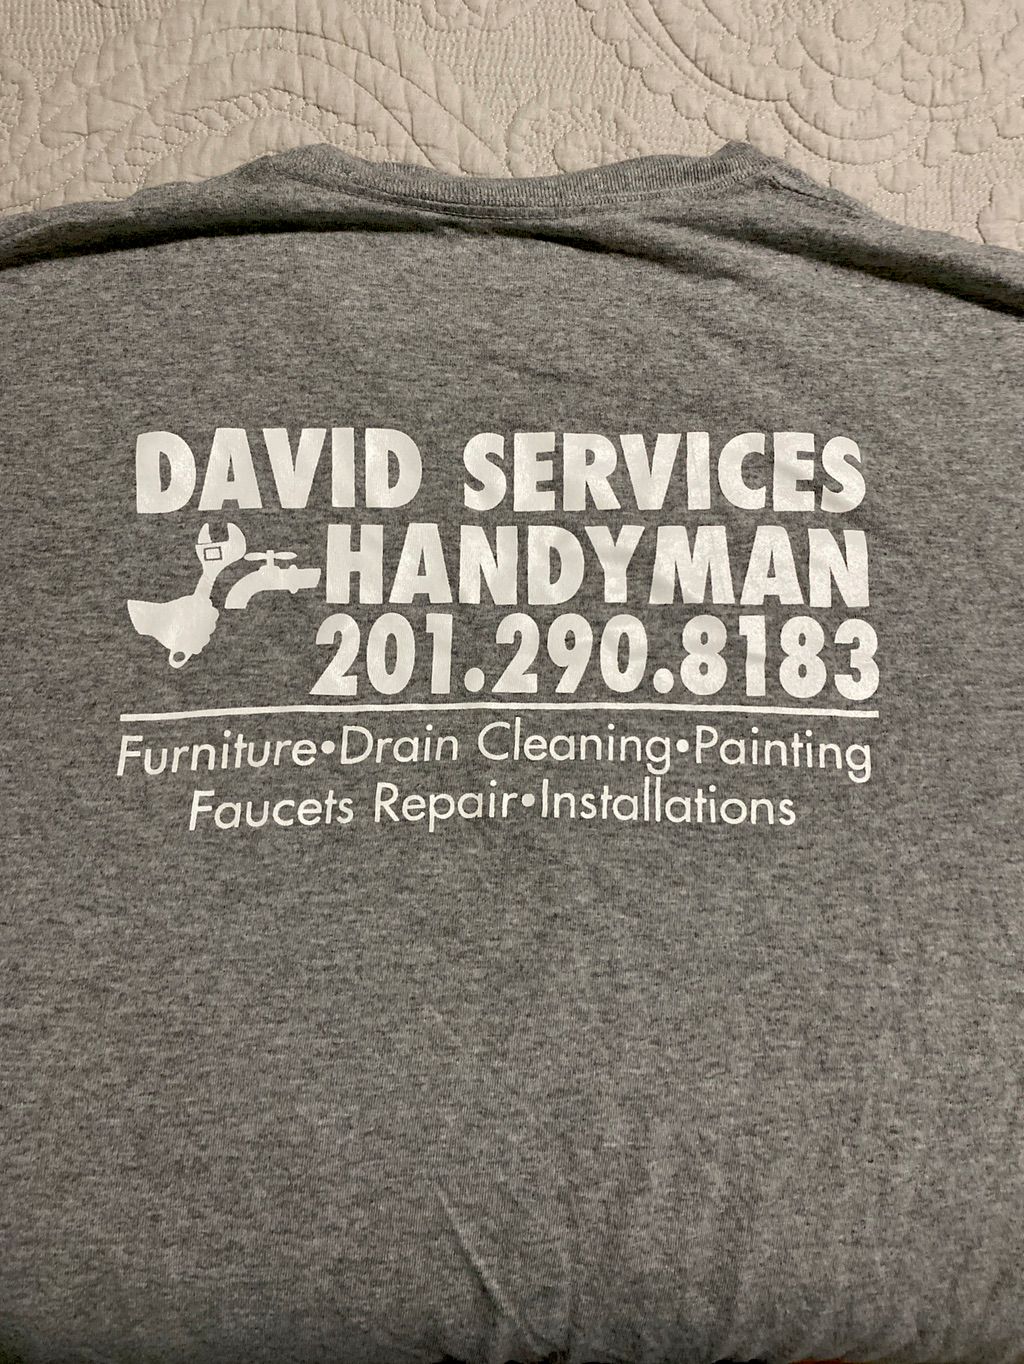 David Services